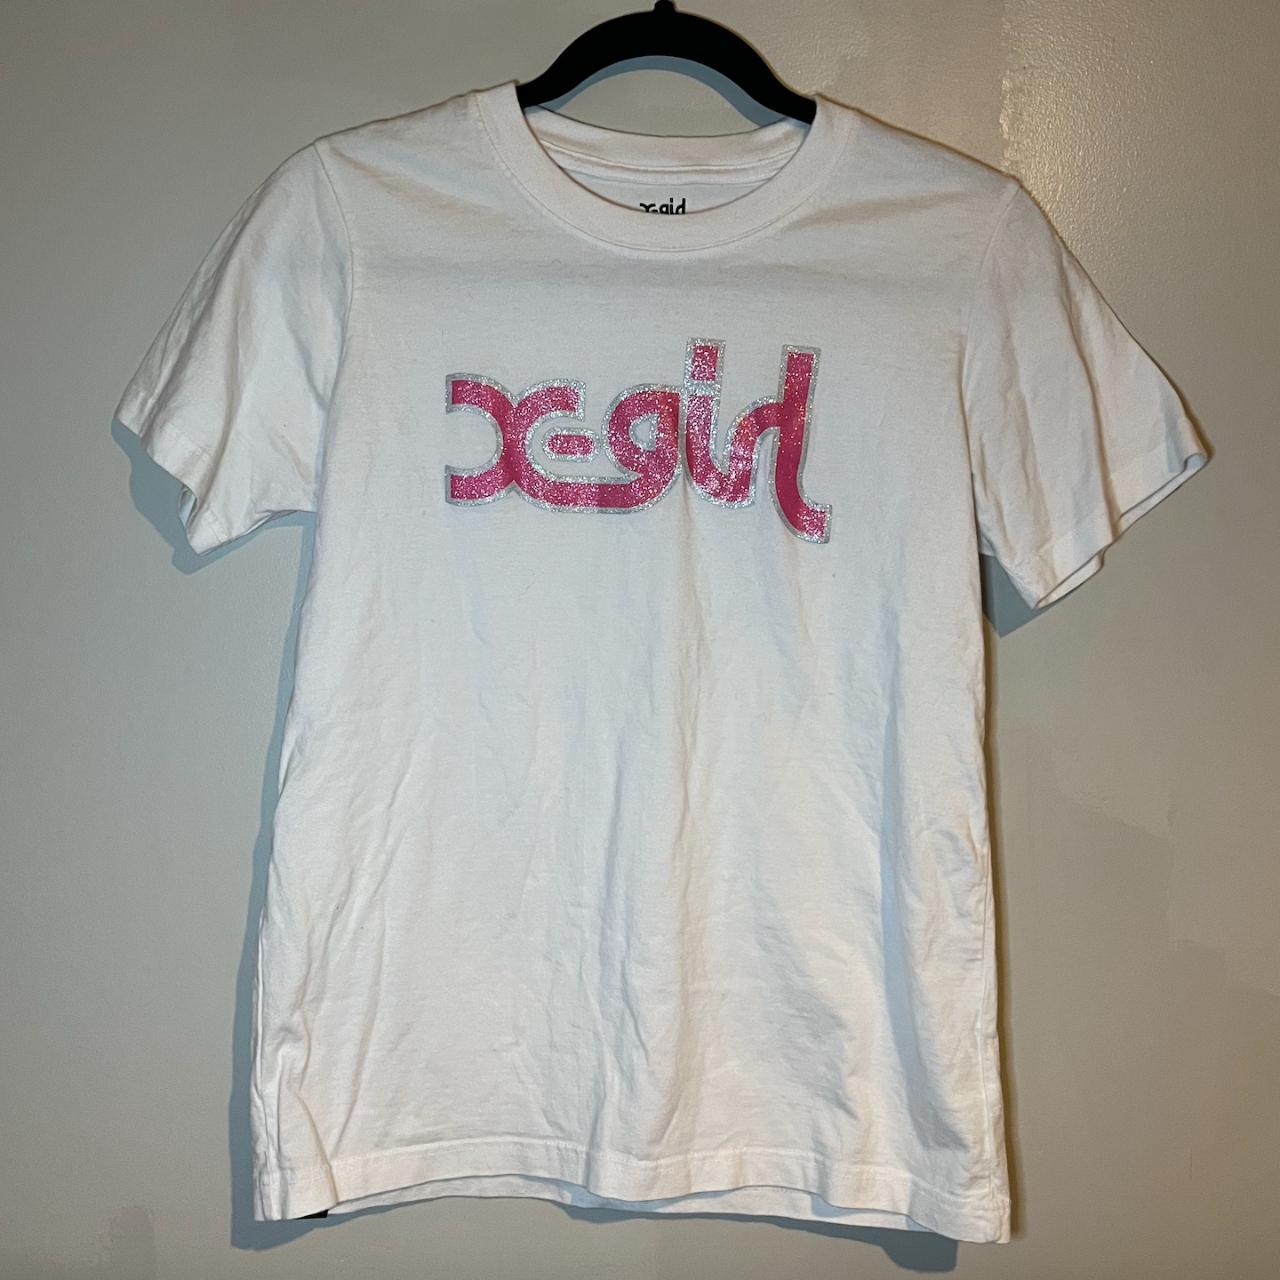 X-Girl  Women's White and Pink T-shirt